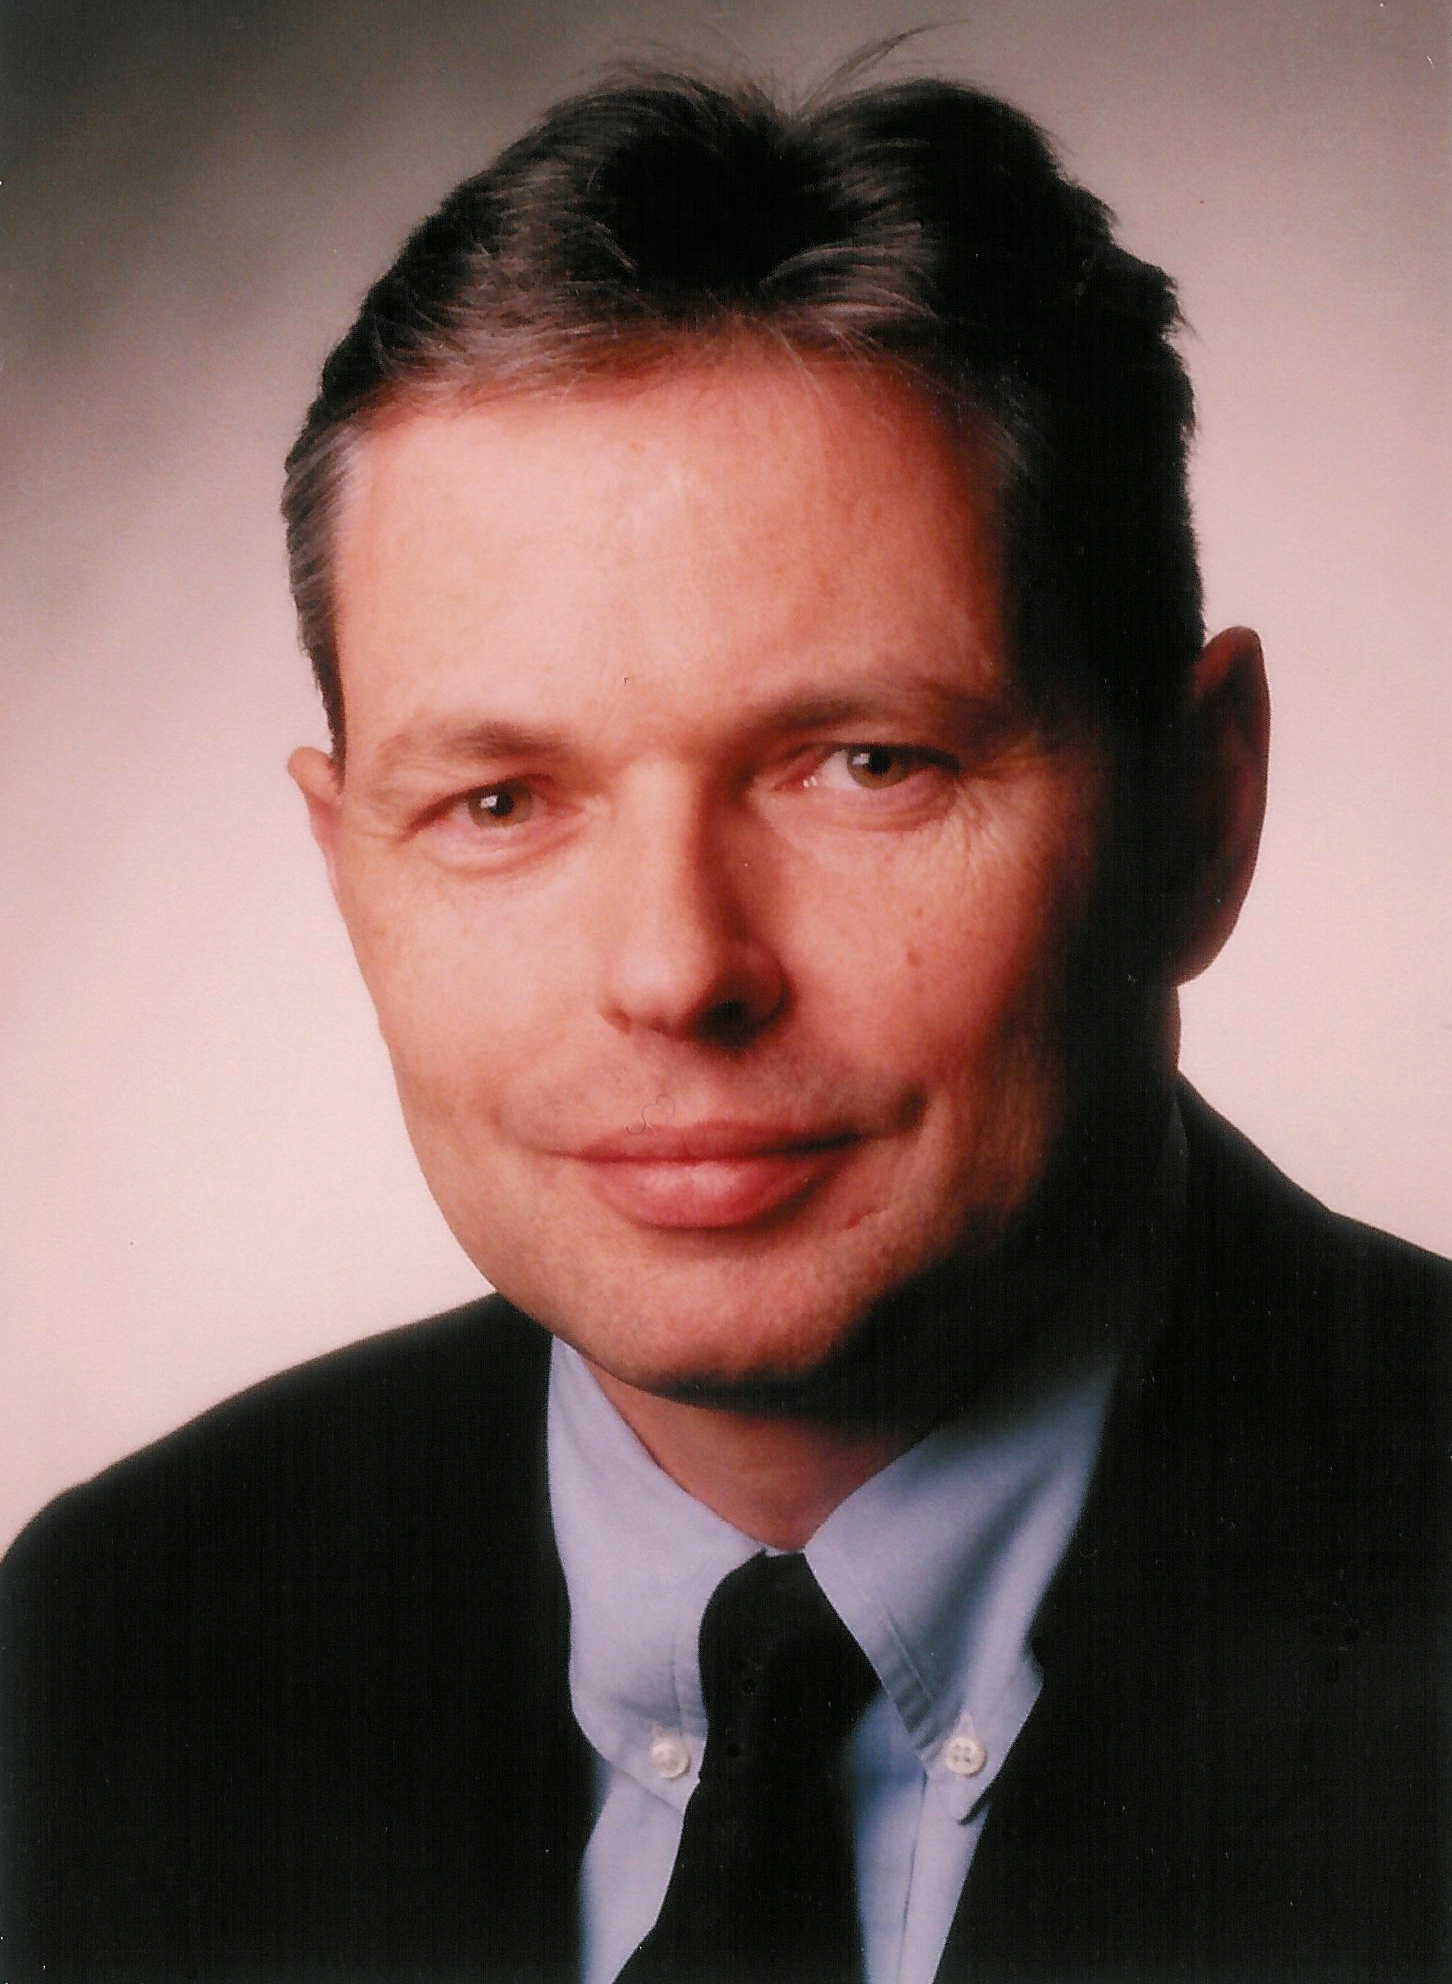 Dr. Stefan Zeuzem